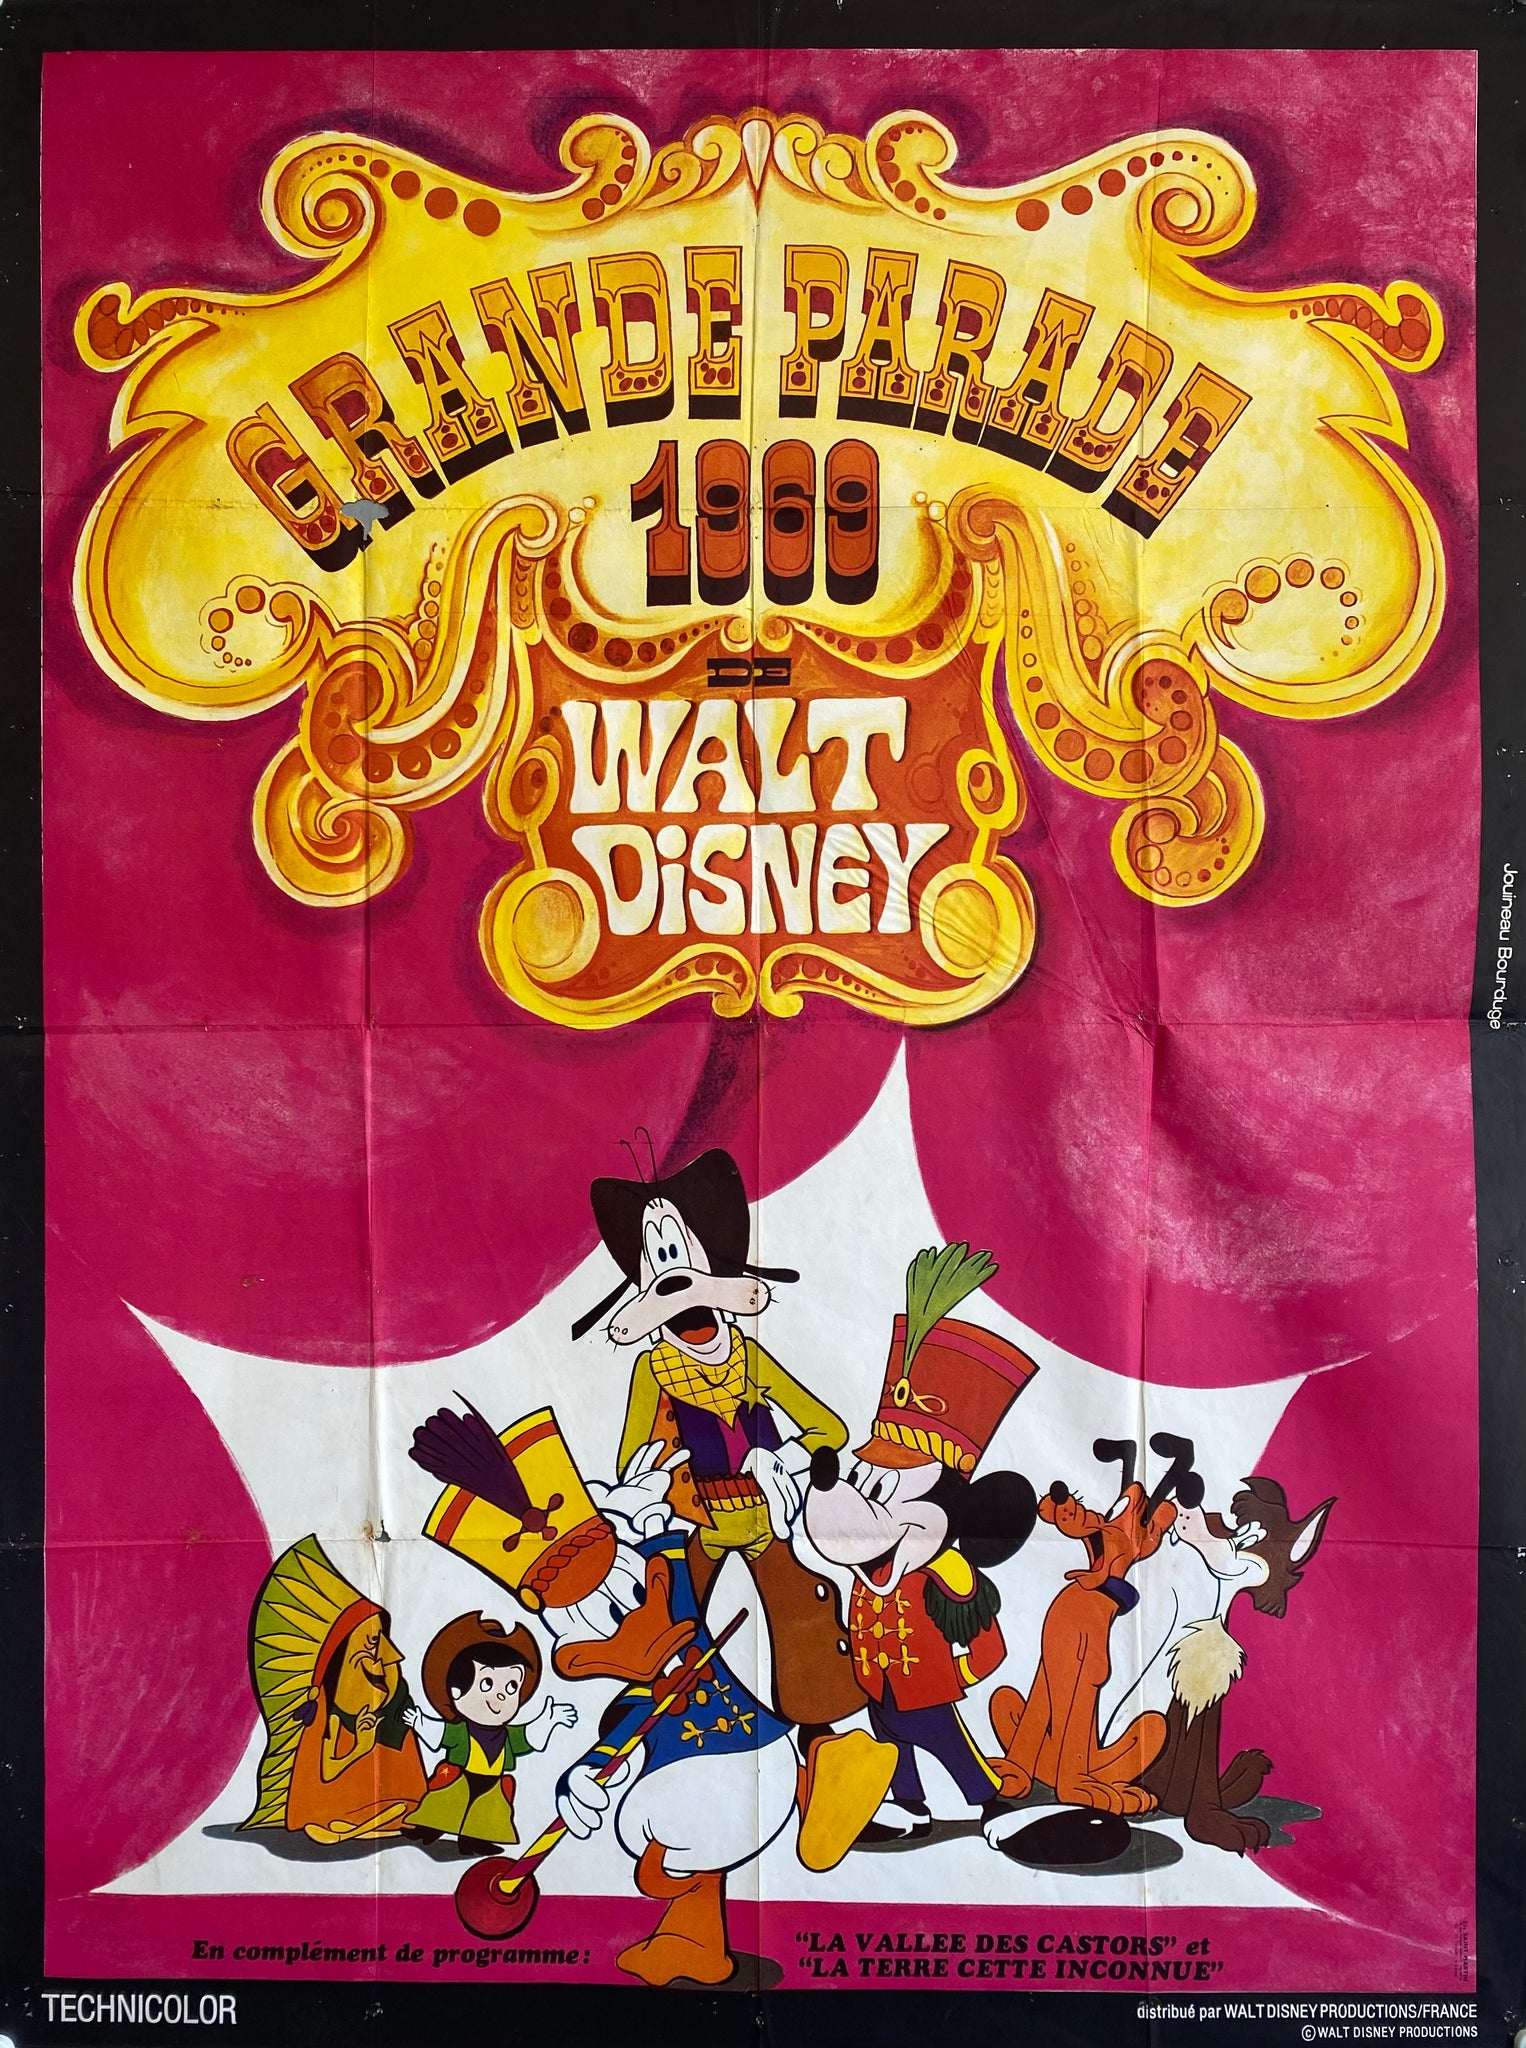 Affiche Cinéma Grande Parade de Disney de 1969.